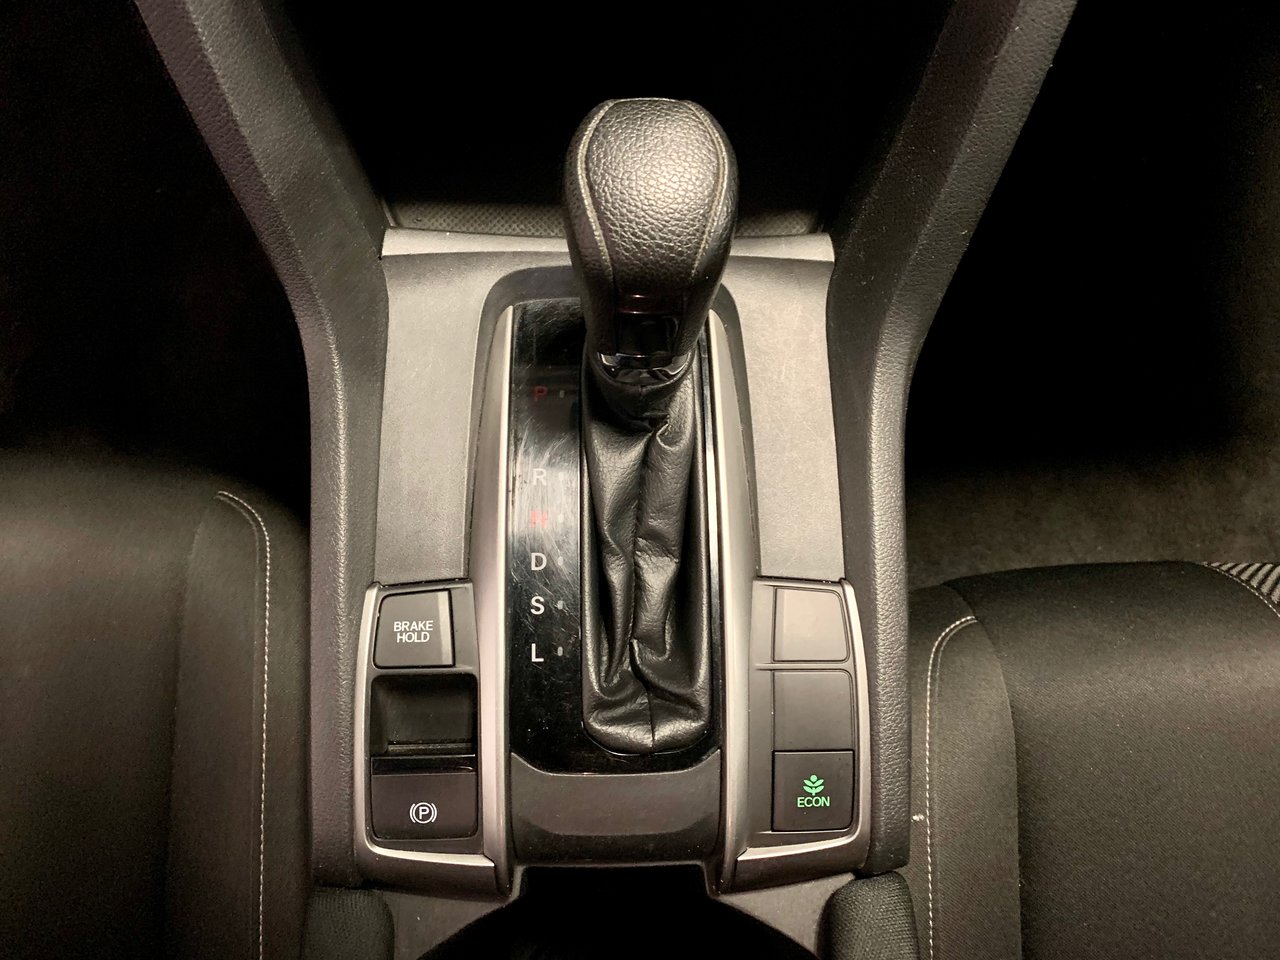 2017 Honda Civic Hatchback LX SPORT TURBO